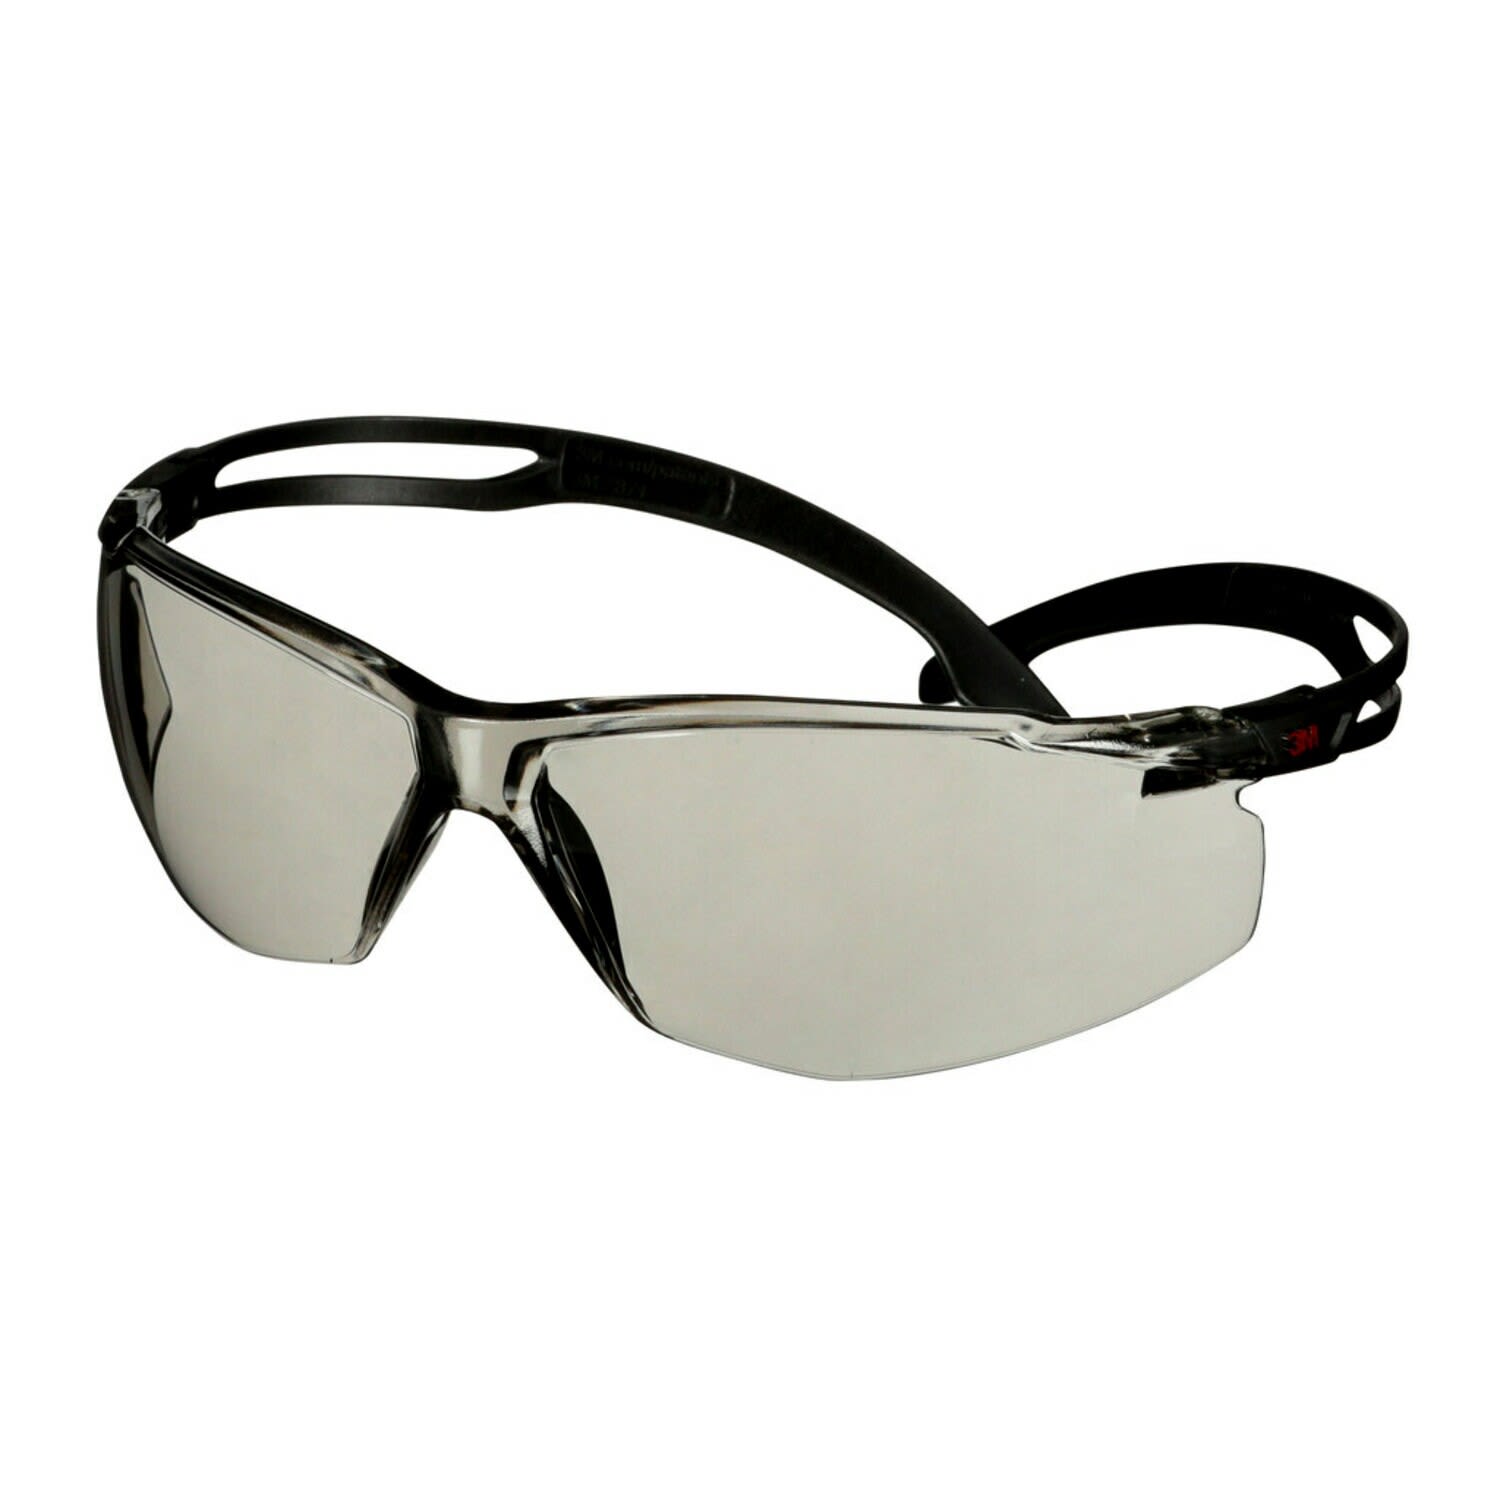 Gafas de seguridad 3M SecureFit 500, color de lente Gris, antirrayaduras, antivaho